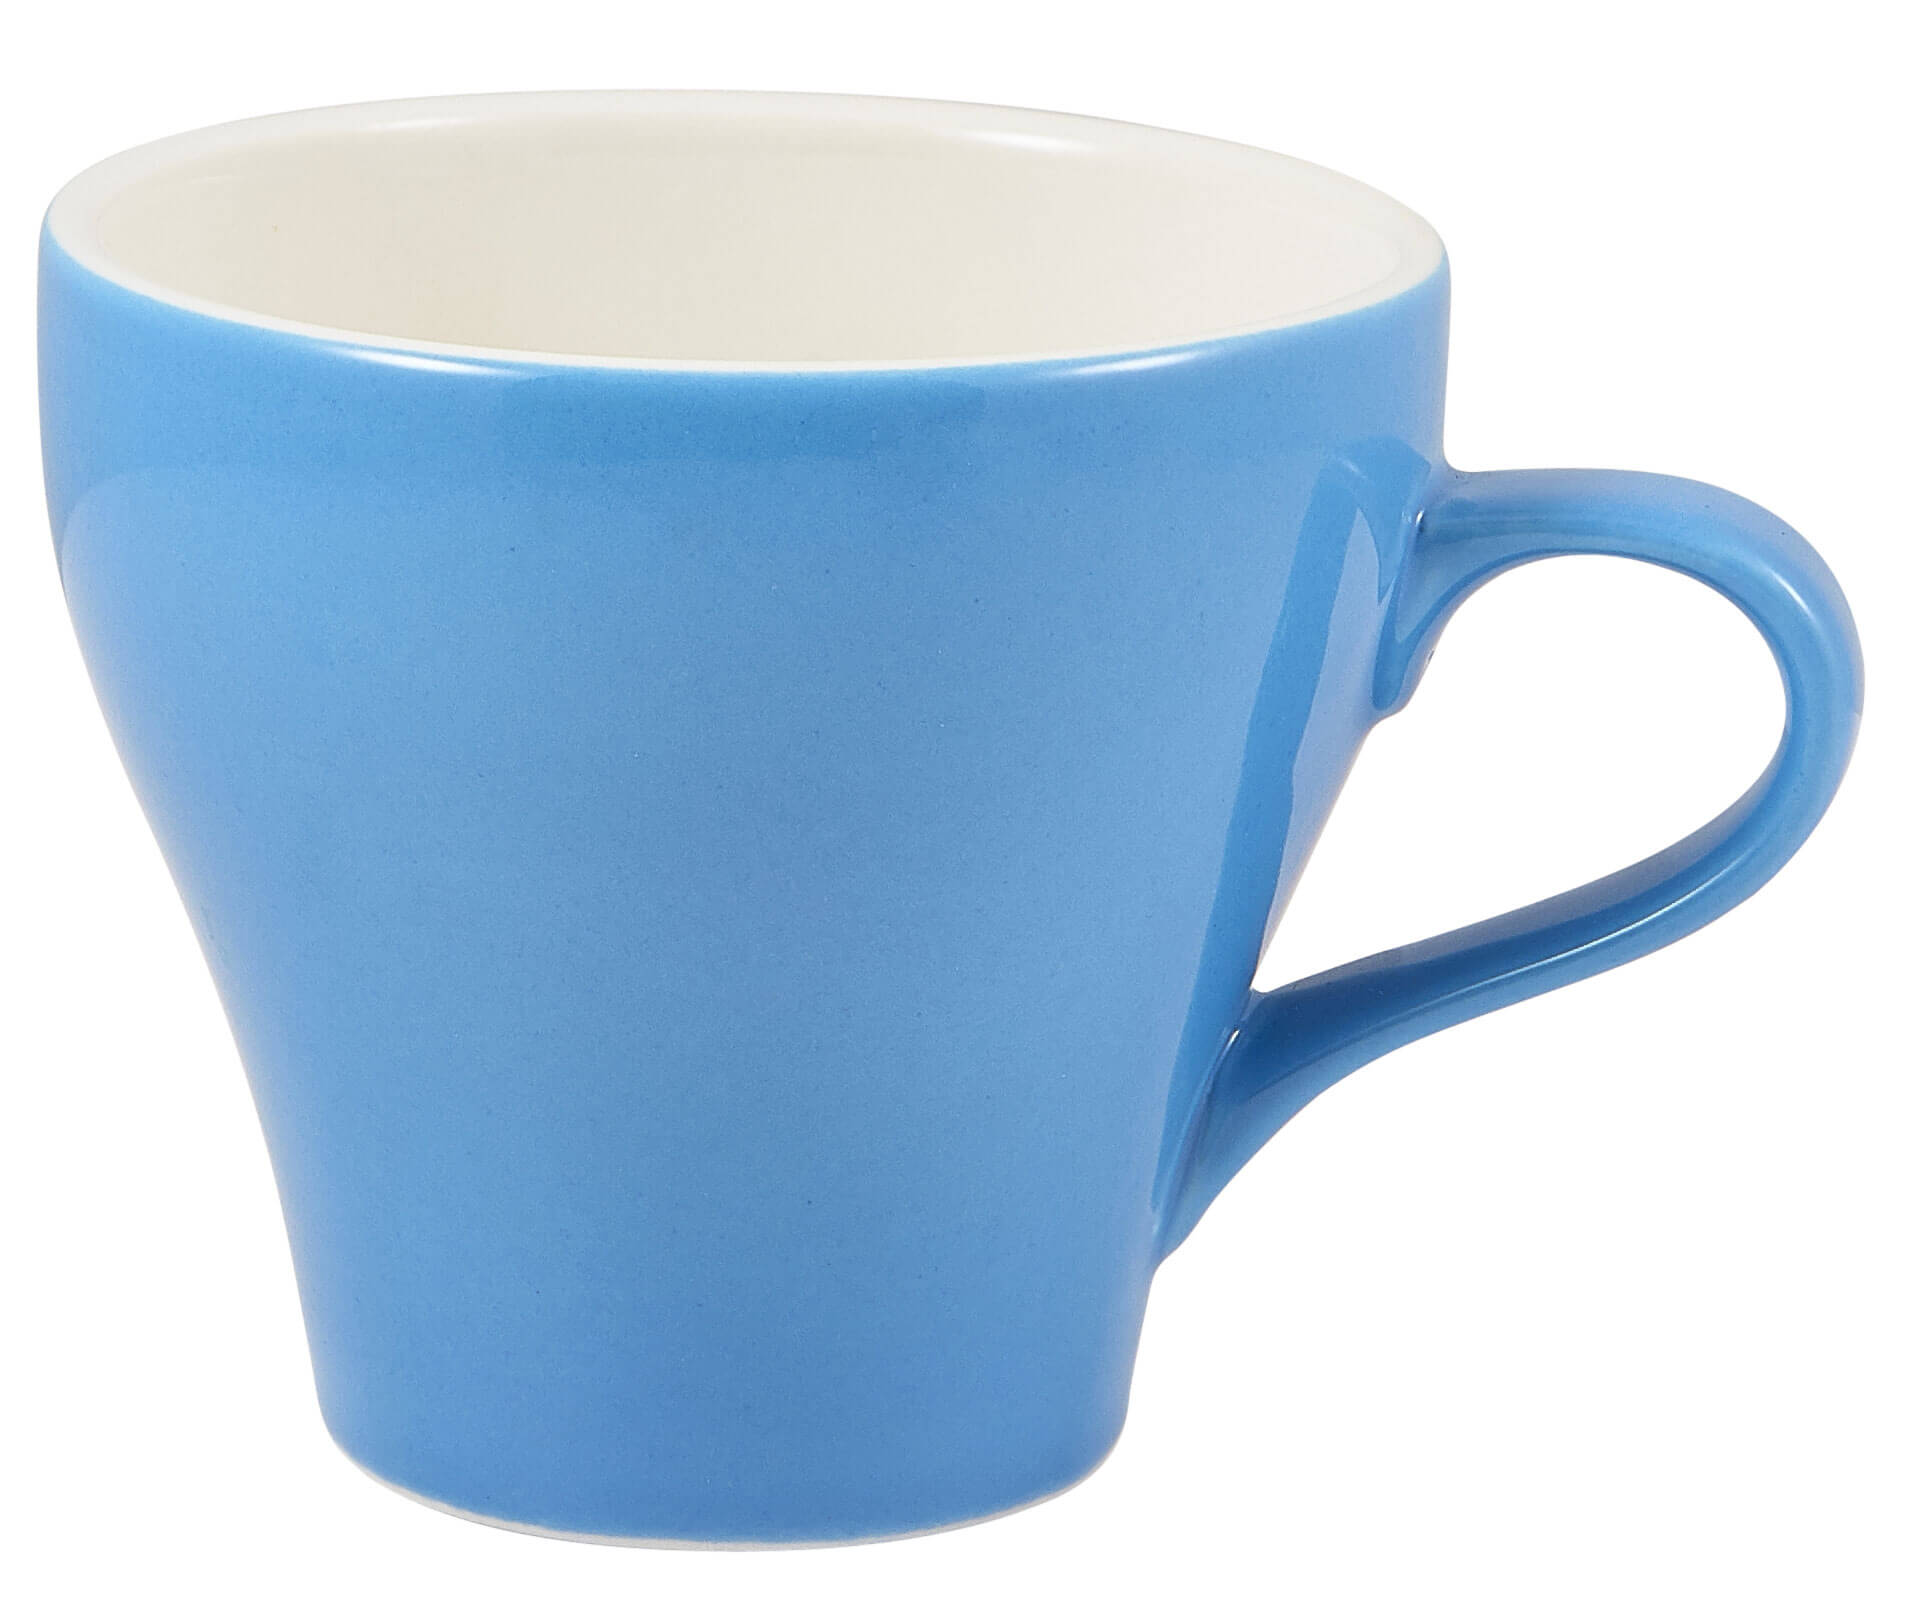 Tulip cup blue - 350ml (6 pcs.)